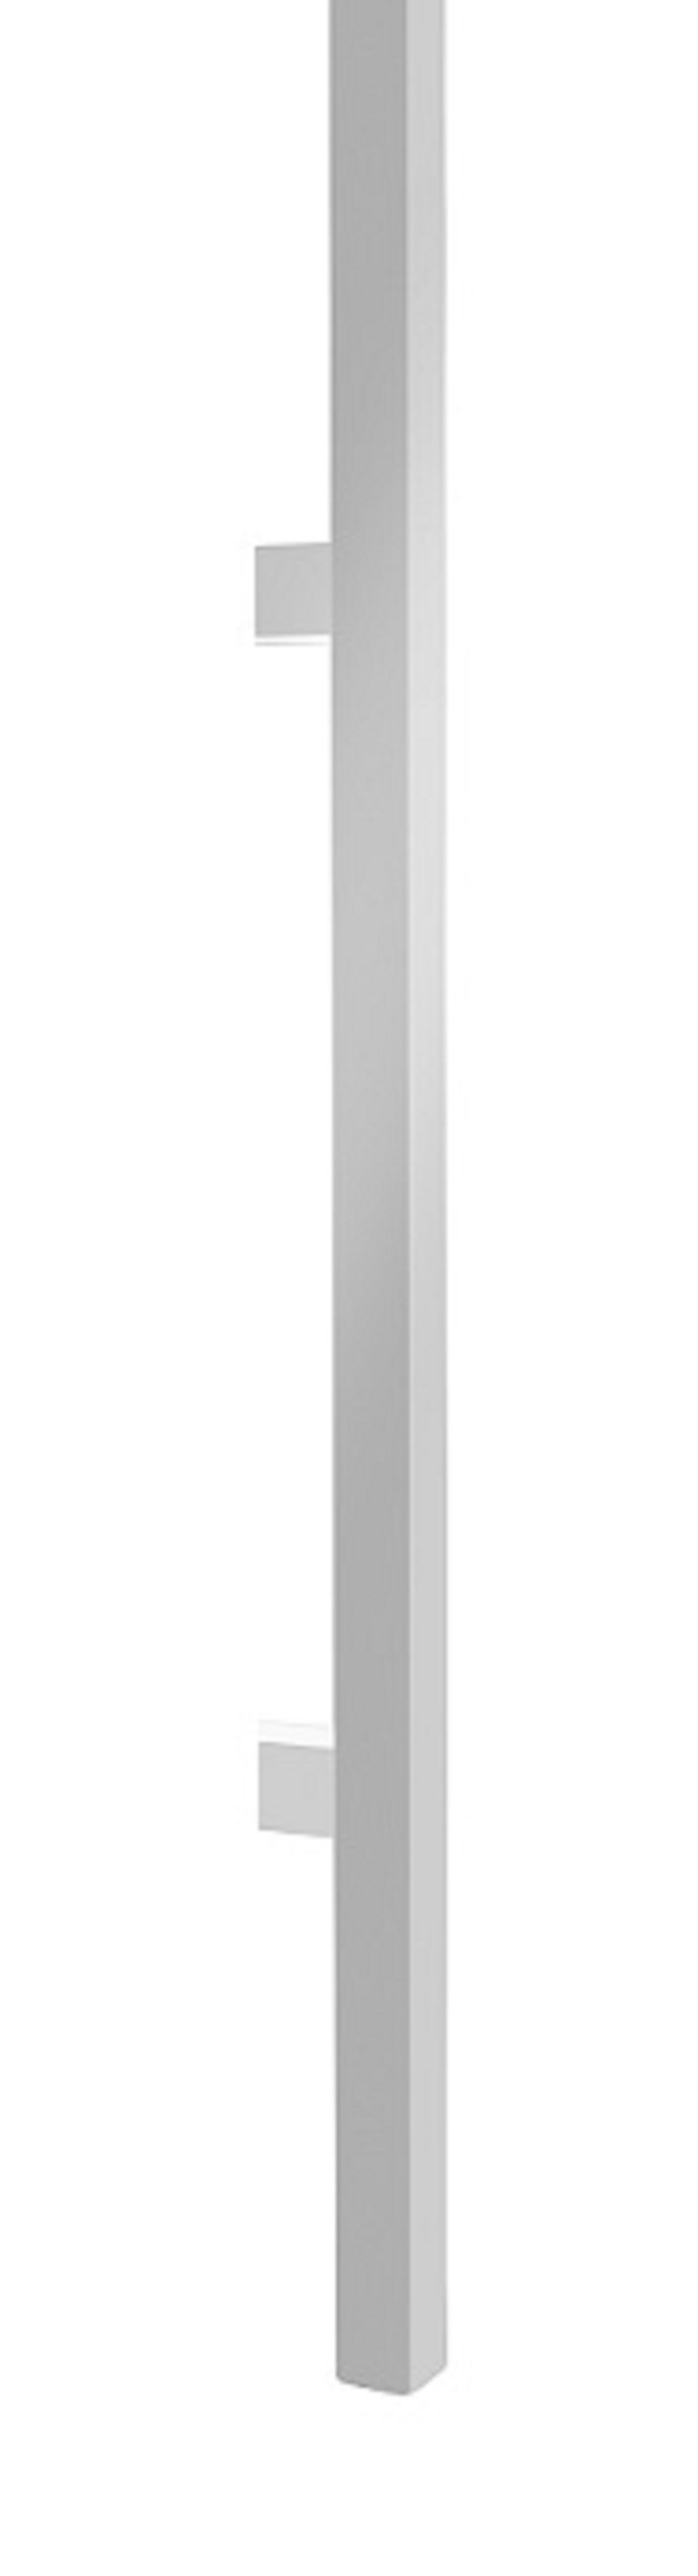 Manillón rectangular inox 1300mm 900mm epoxi blanco